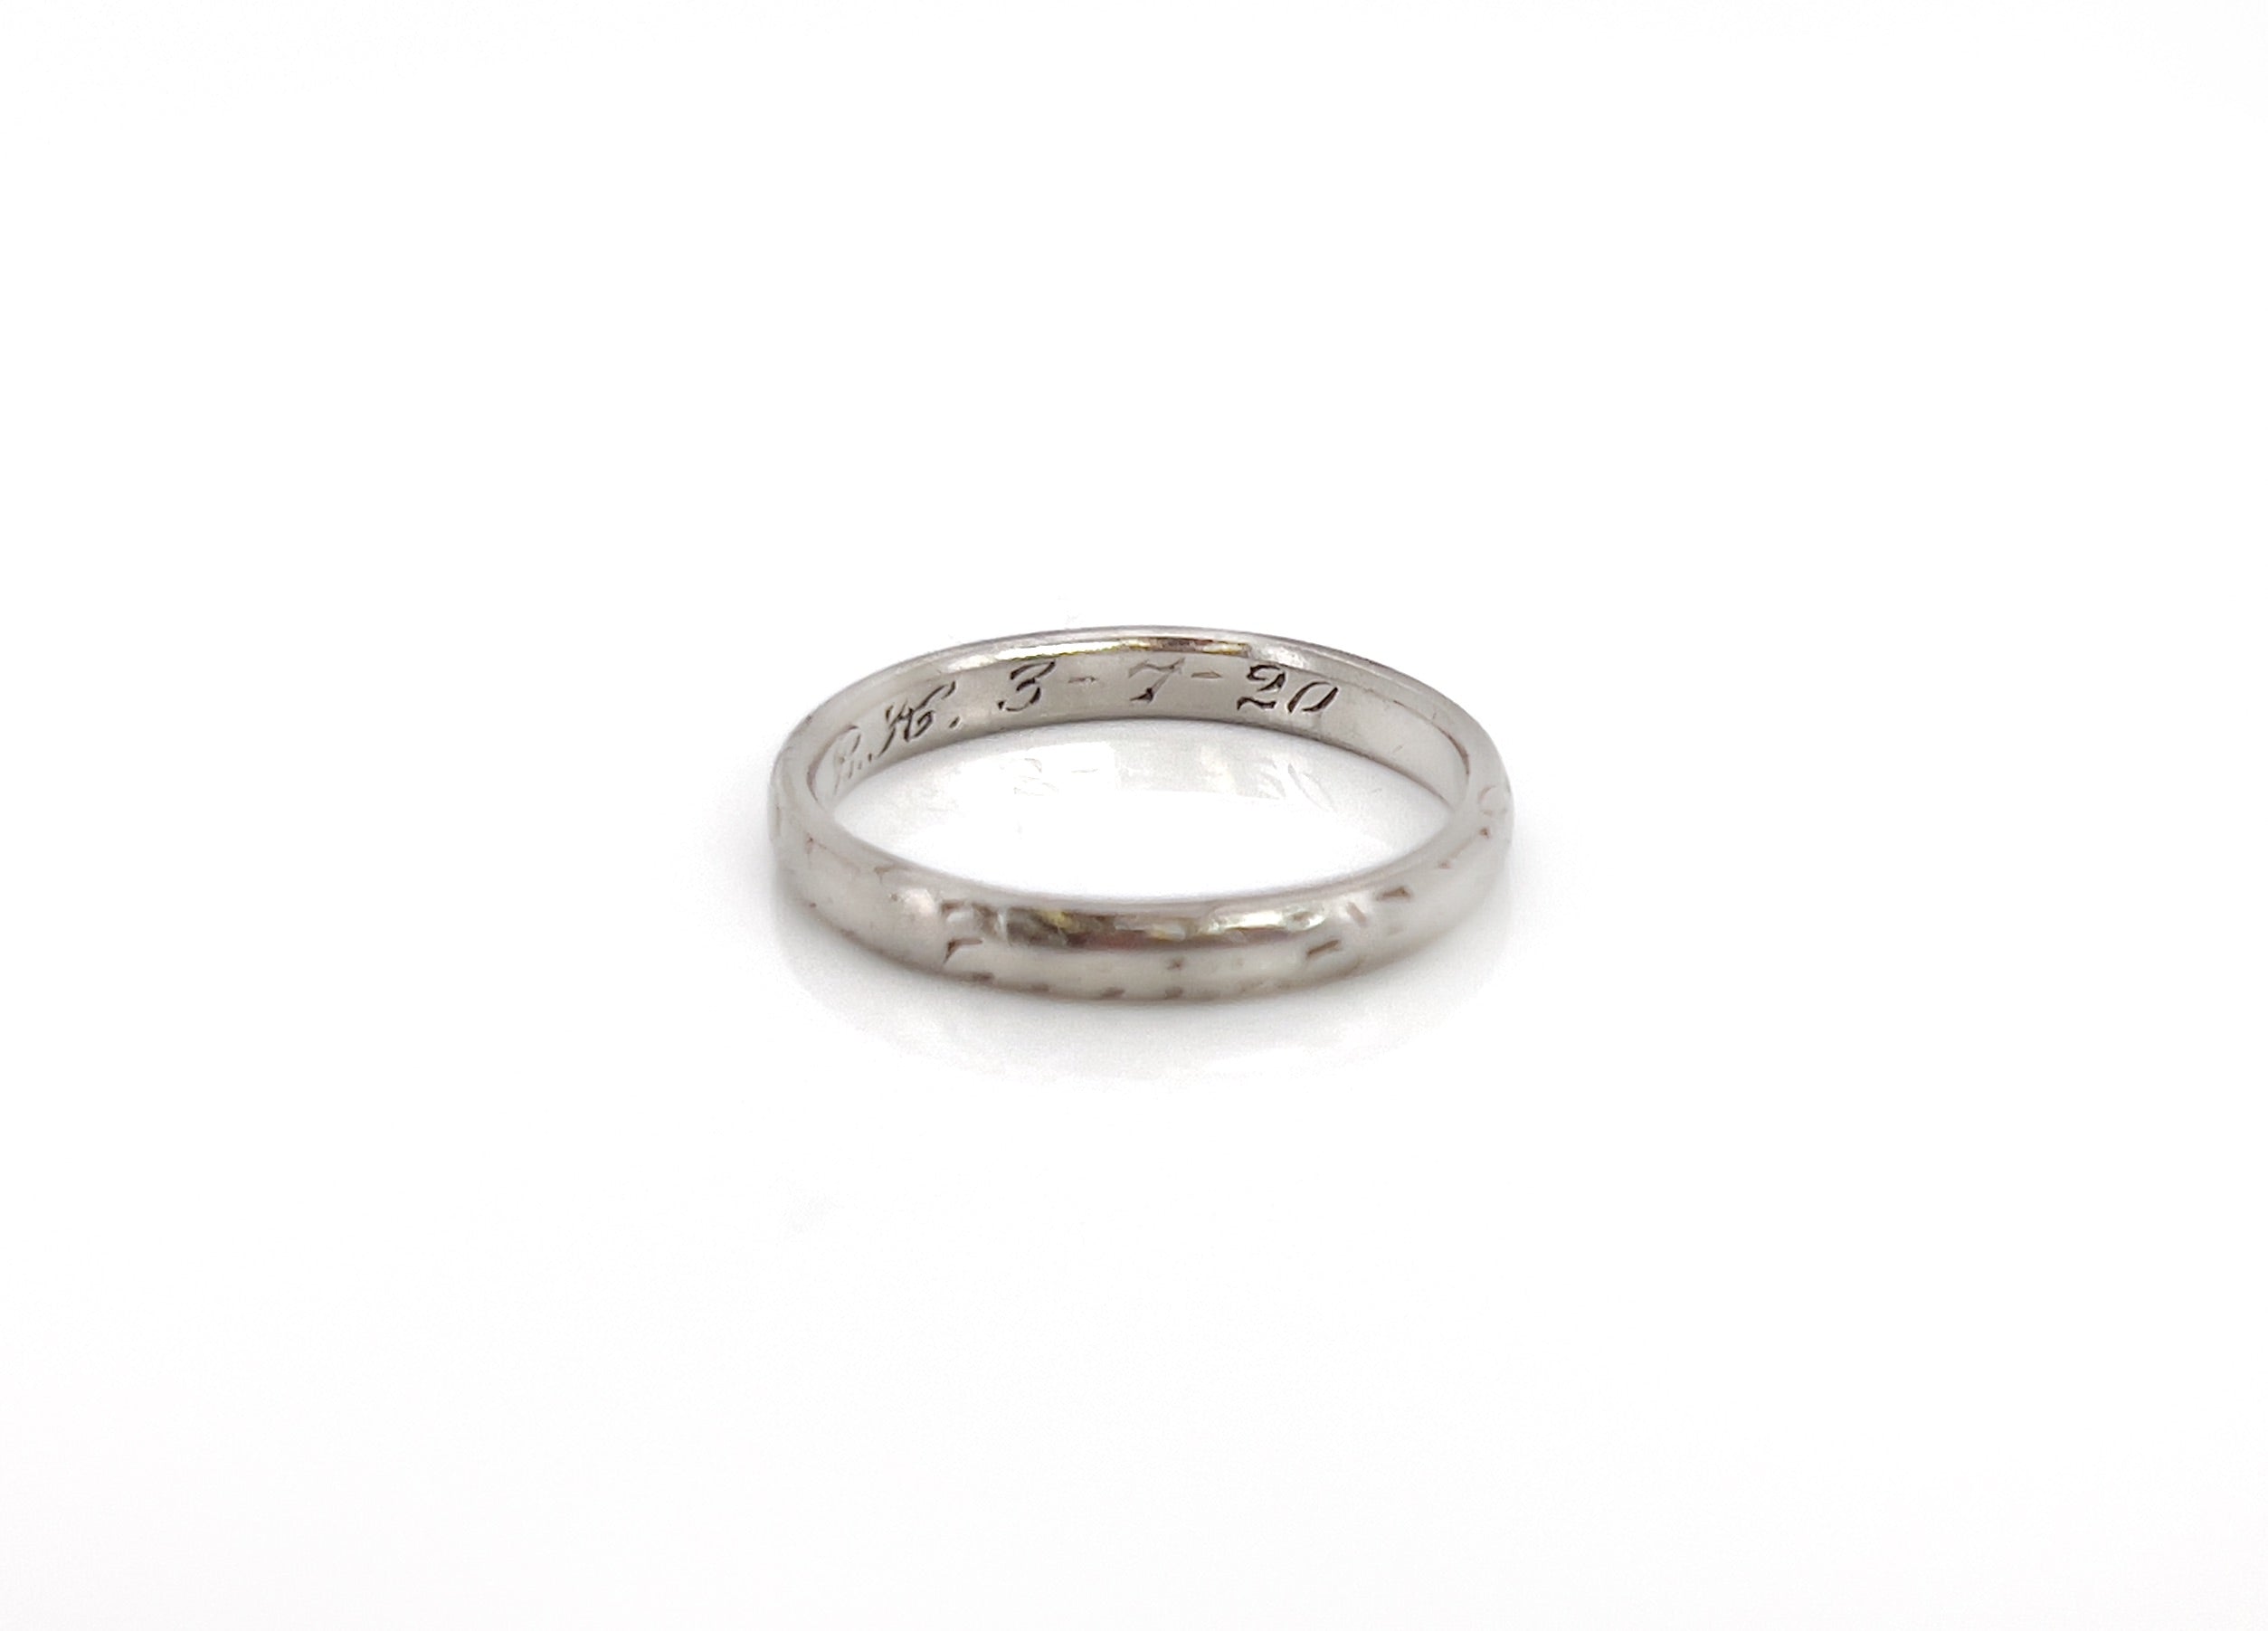 Art Deco, Platinum Wedding Ring, B.E.W. to M.B.K 3–7–20, Size 5.5